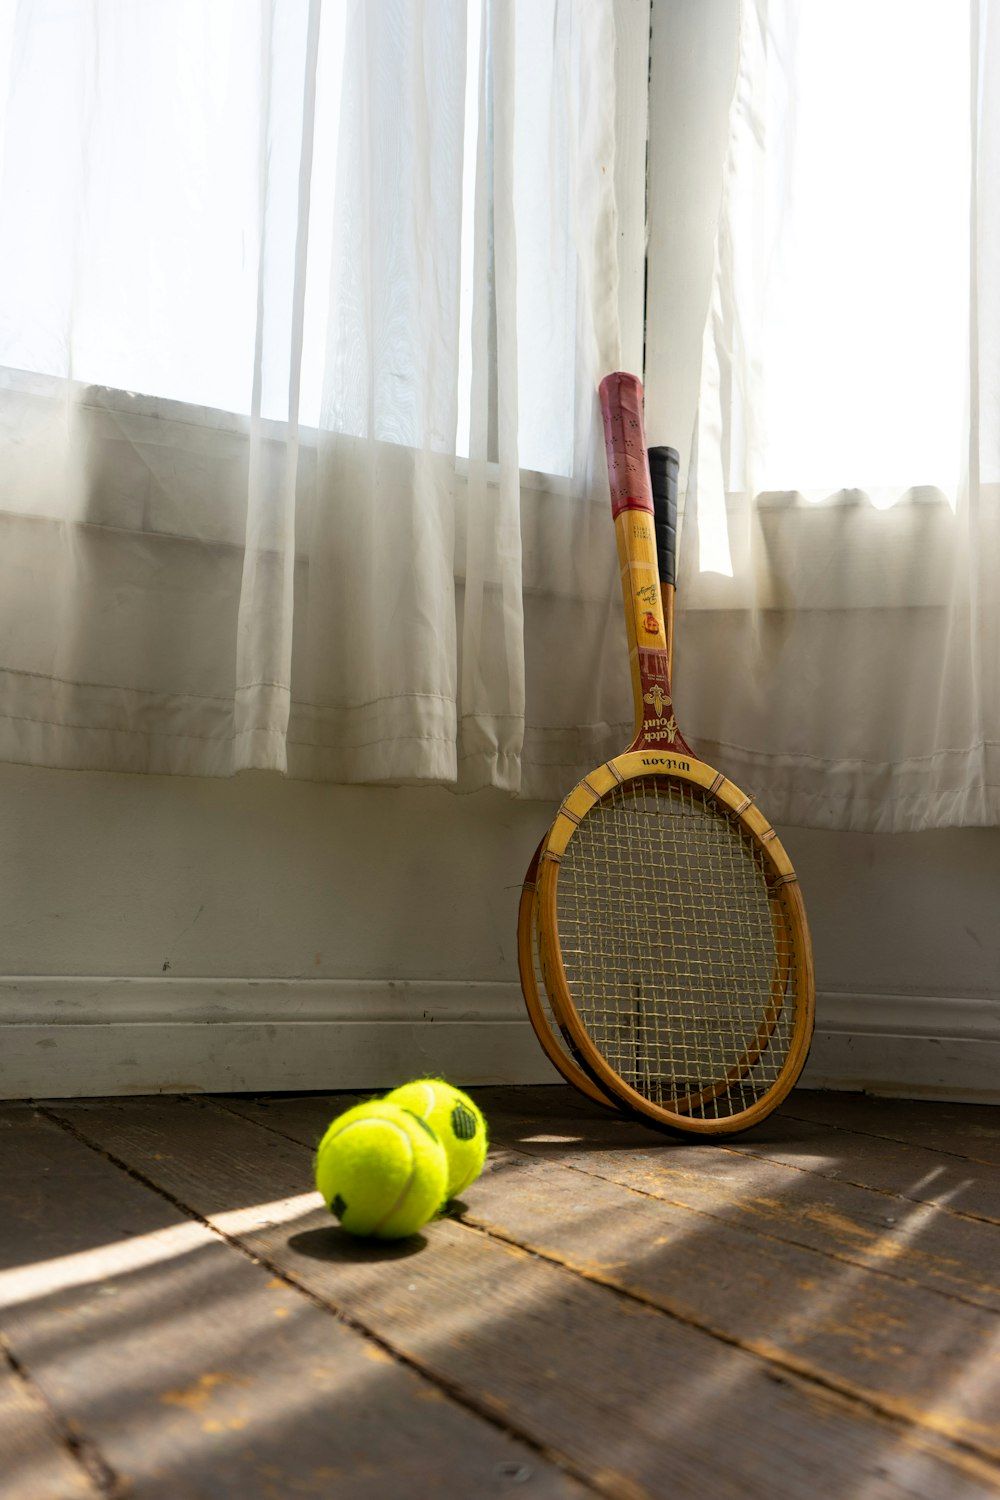 yellow and black tennis racket